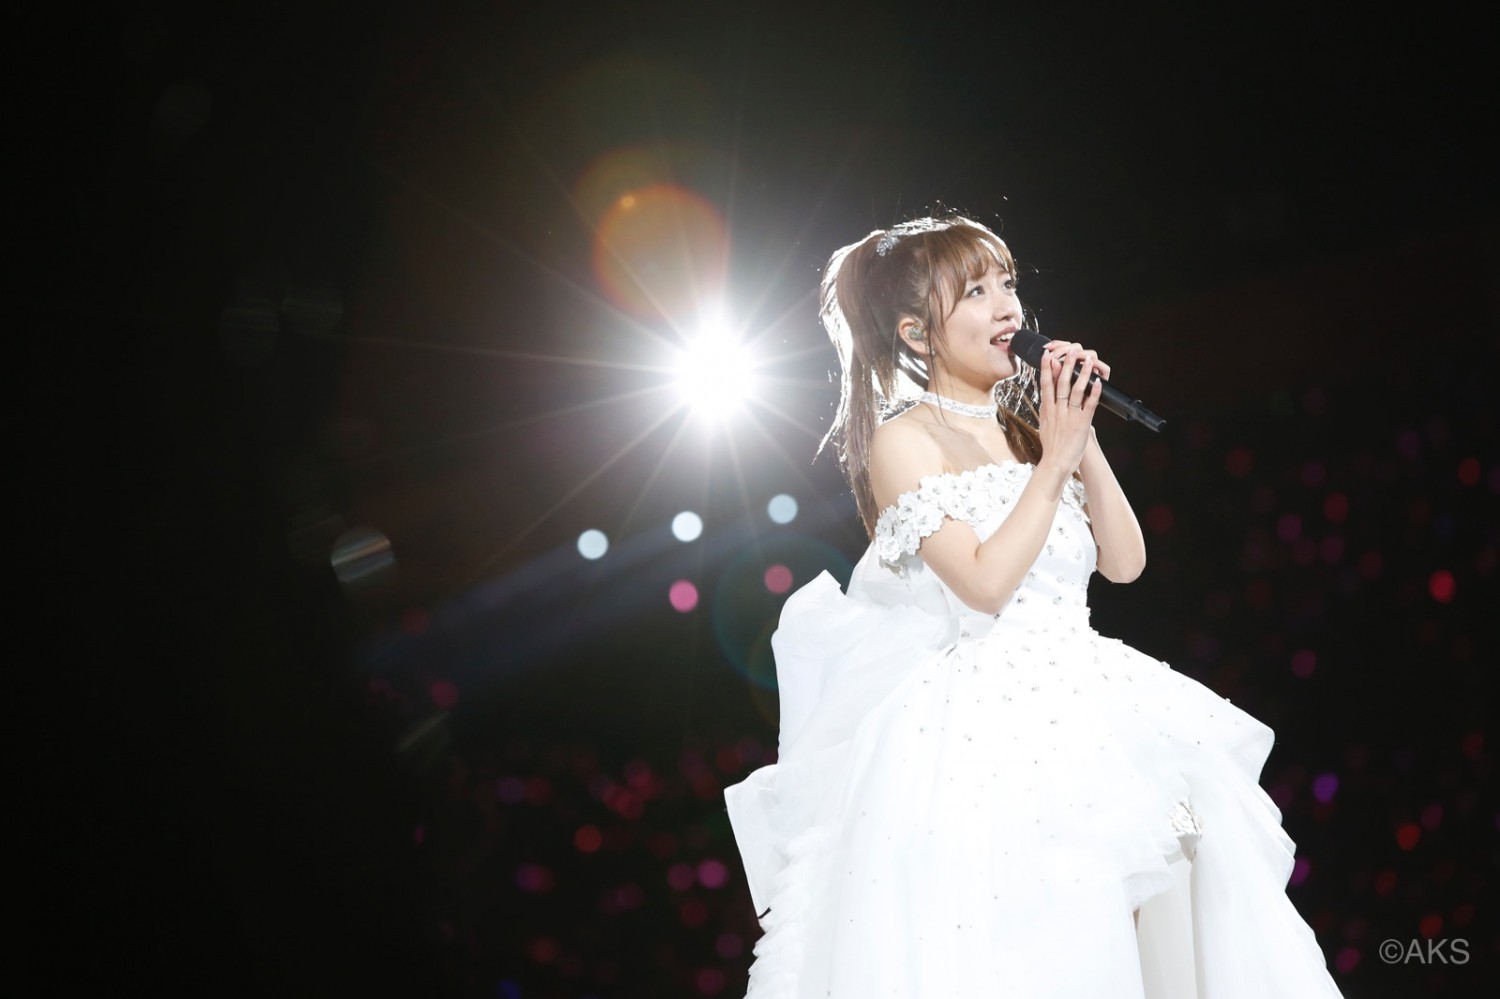 Preview of Minami Takahashi’s Graduation Concert at Yokohama Stadium Released!